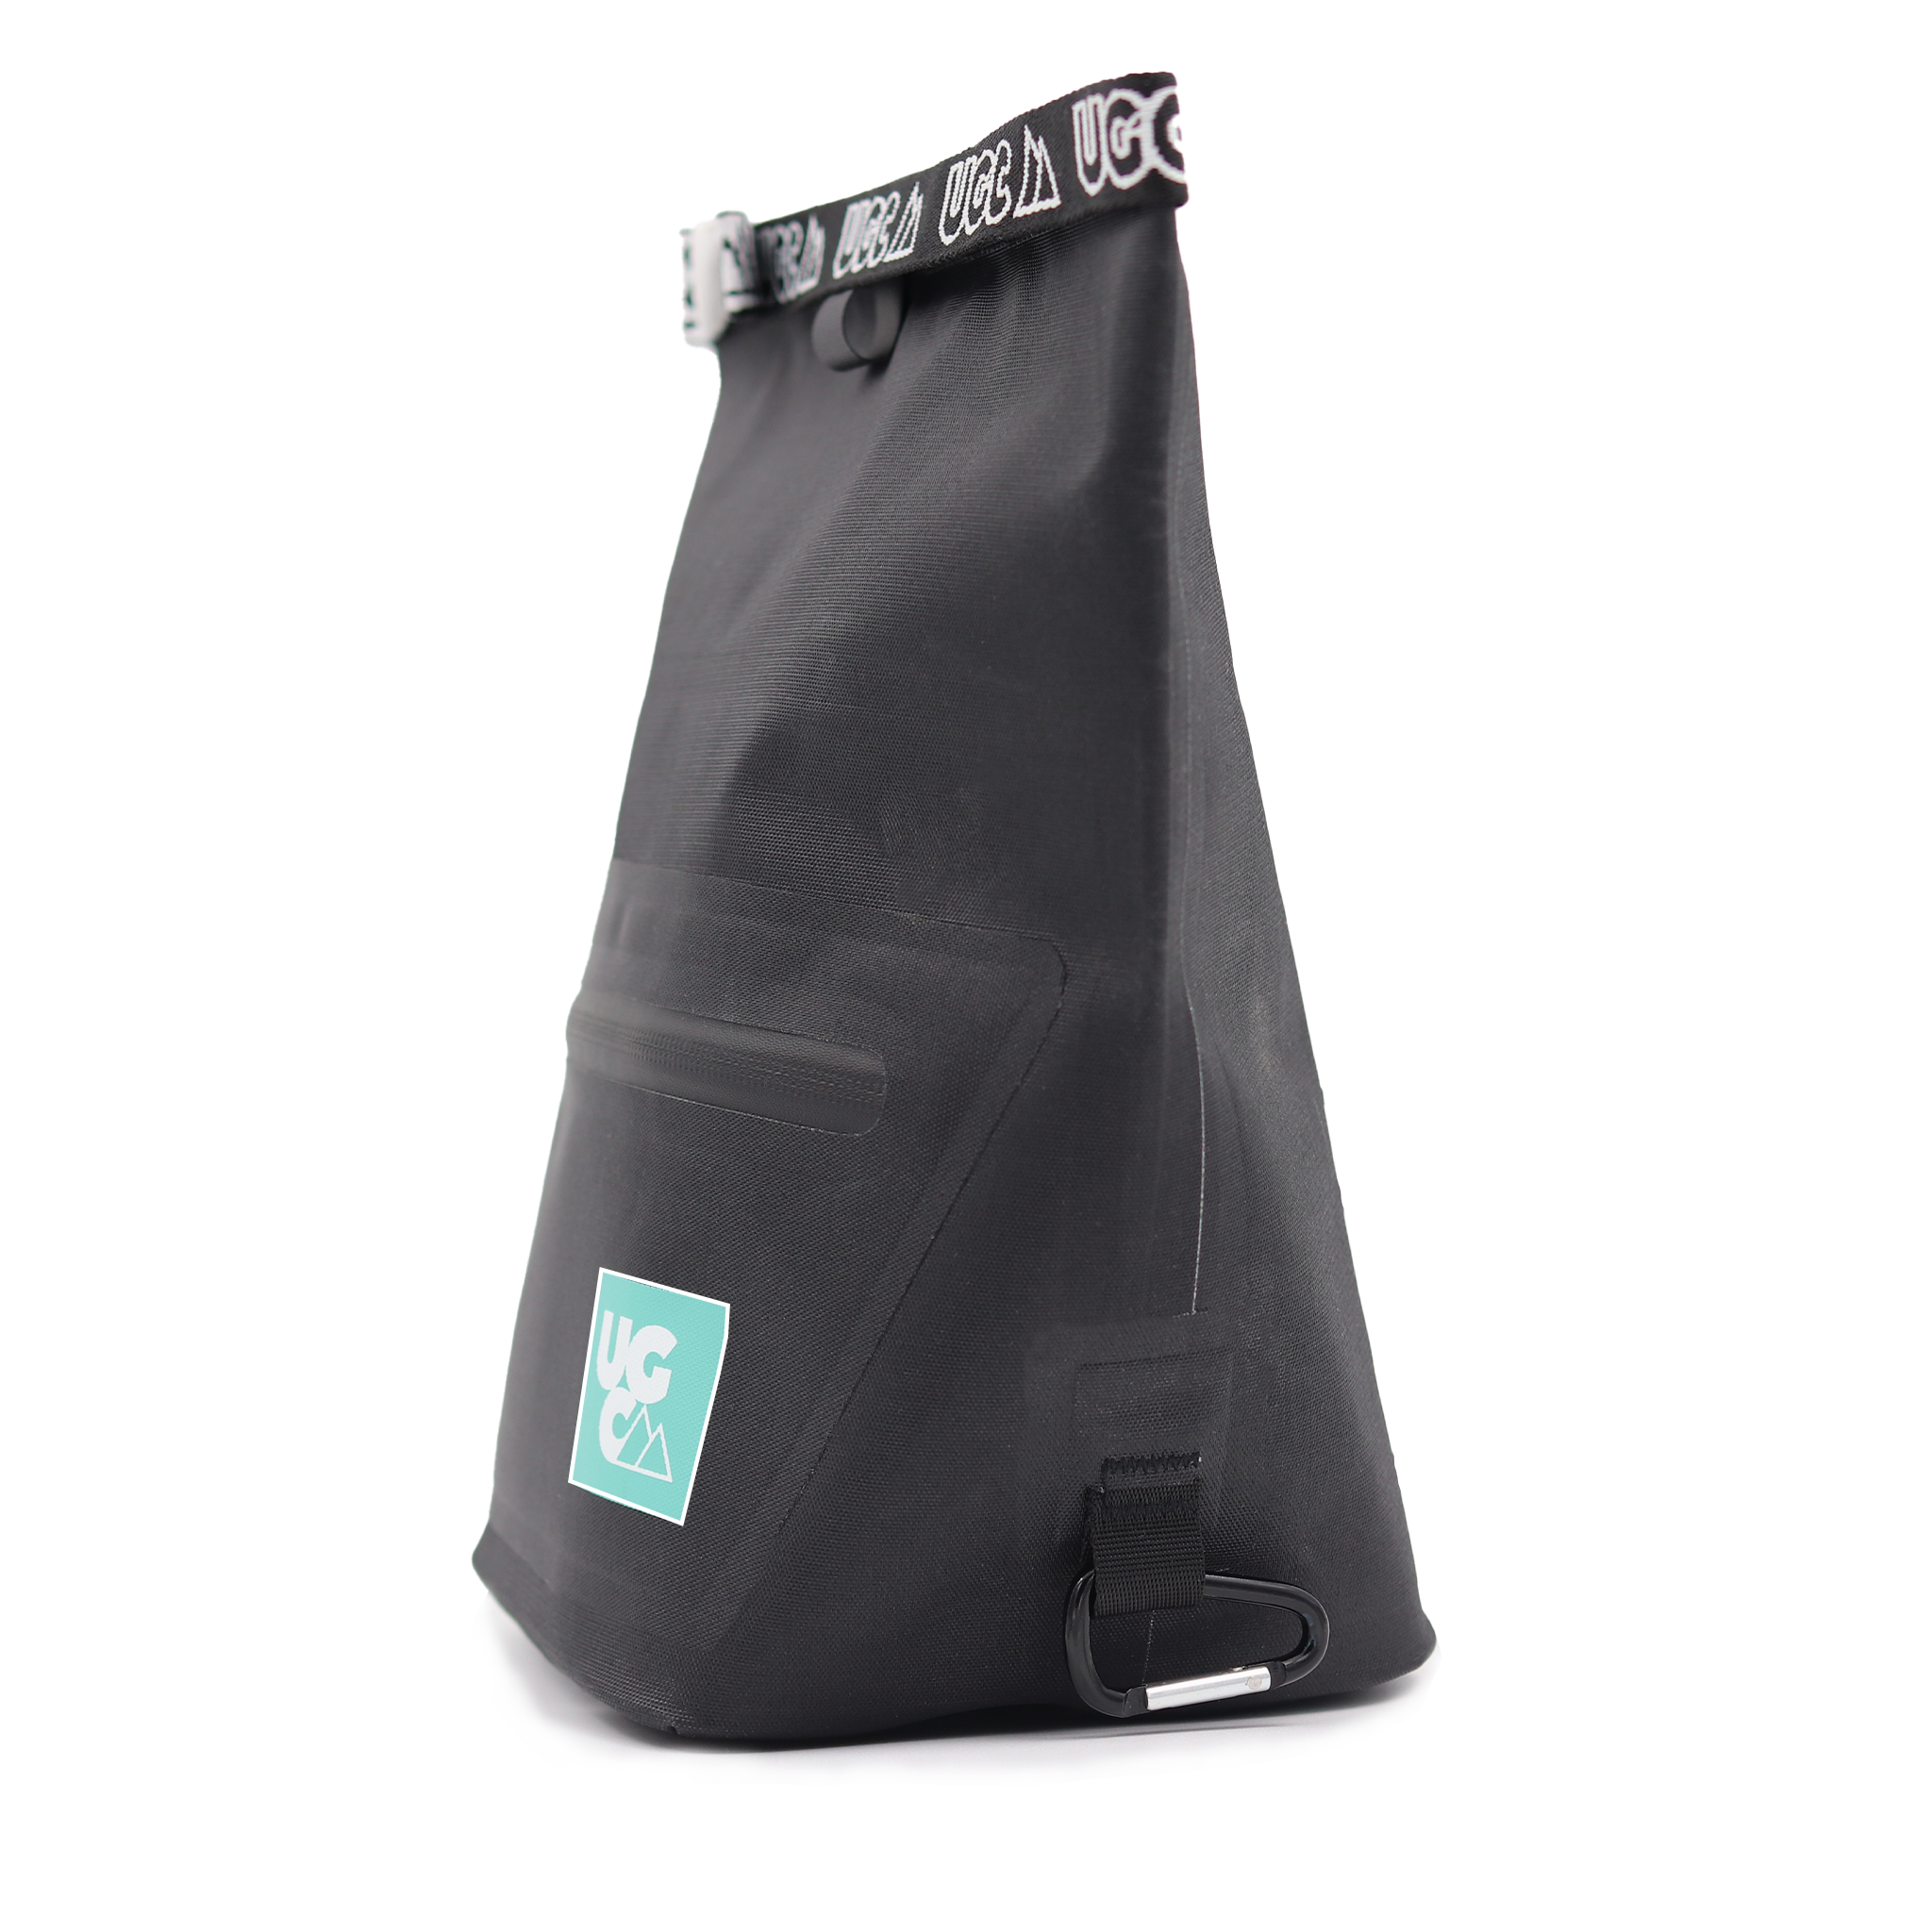 Organic Chalk Bag – Cultivate Climbing